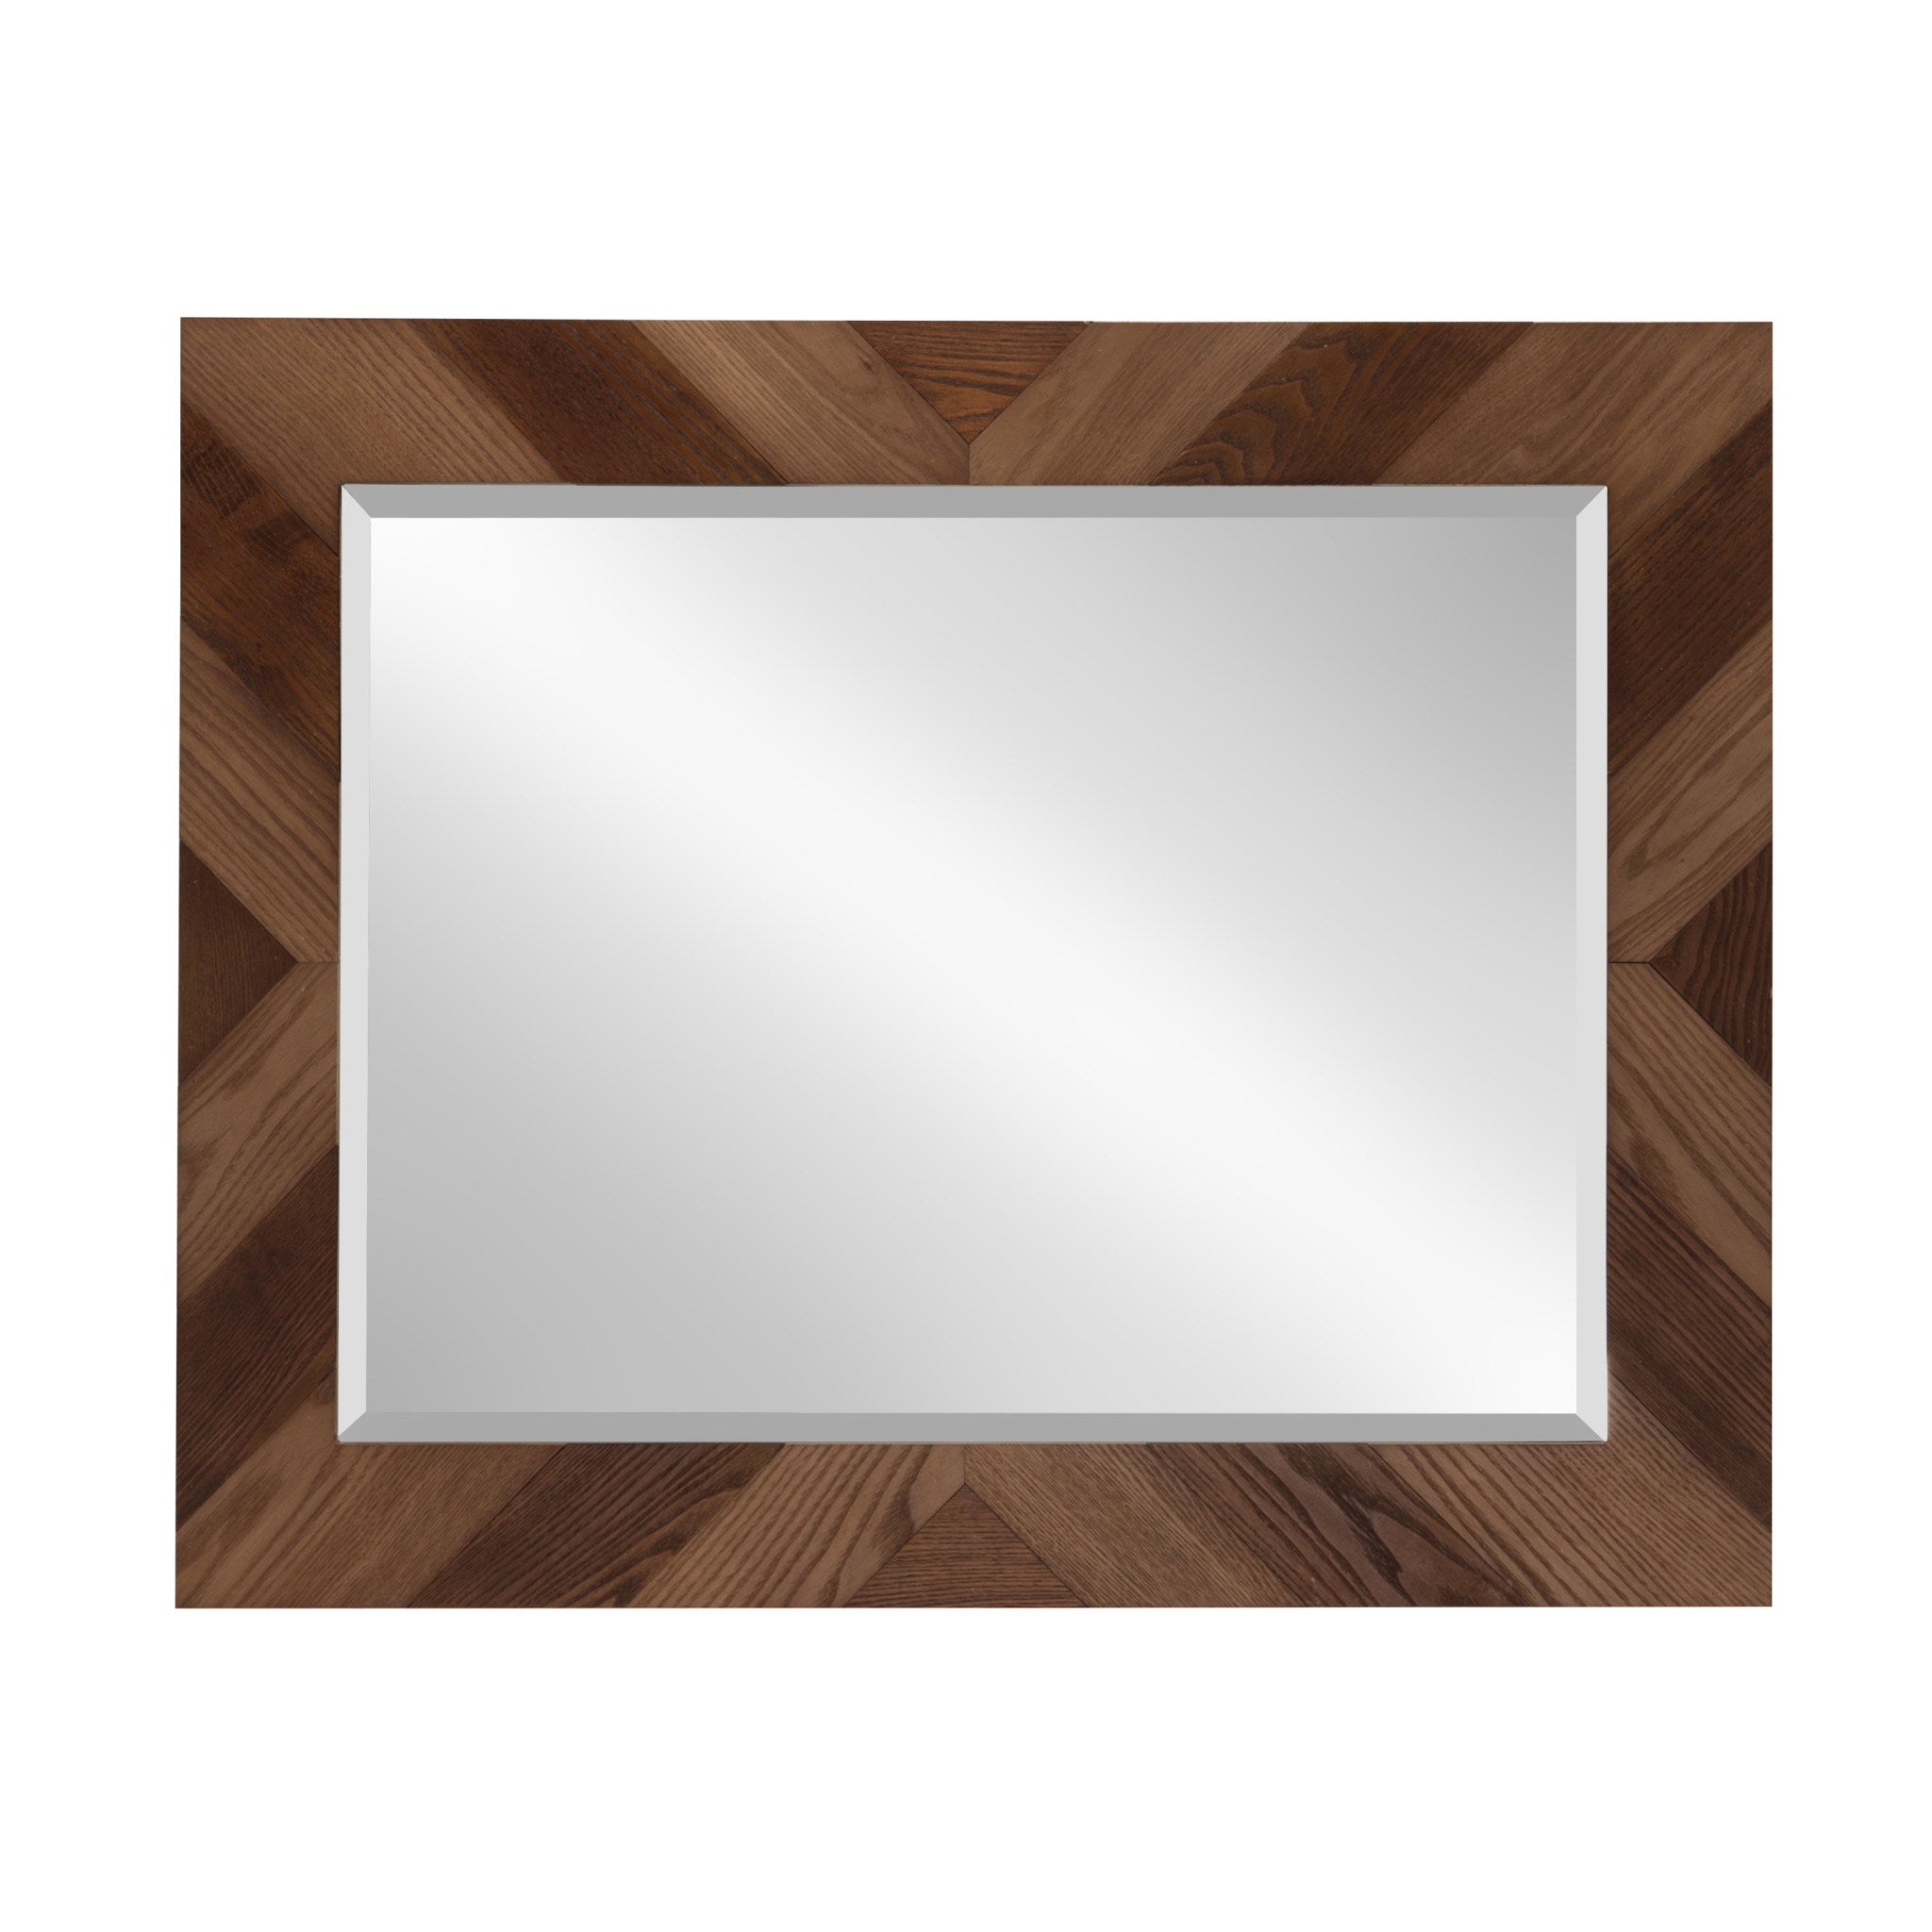 Rost Pieced Wood Framed Wall Mirror